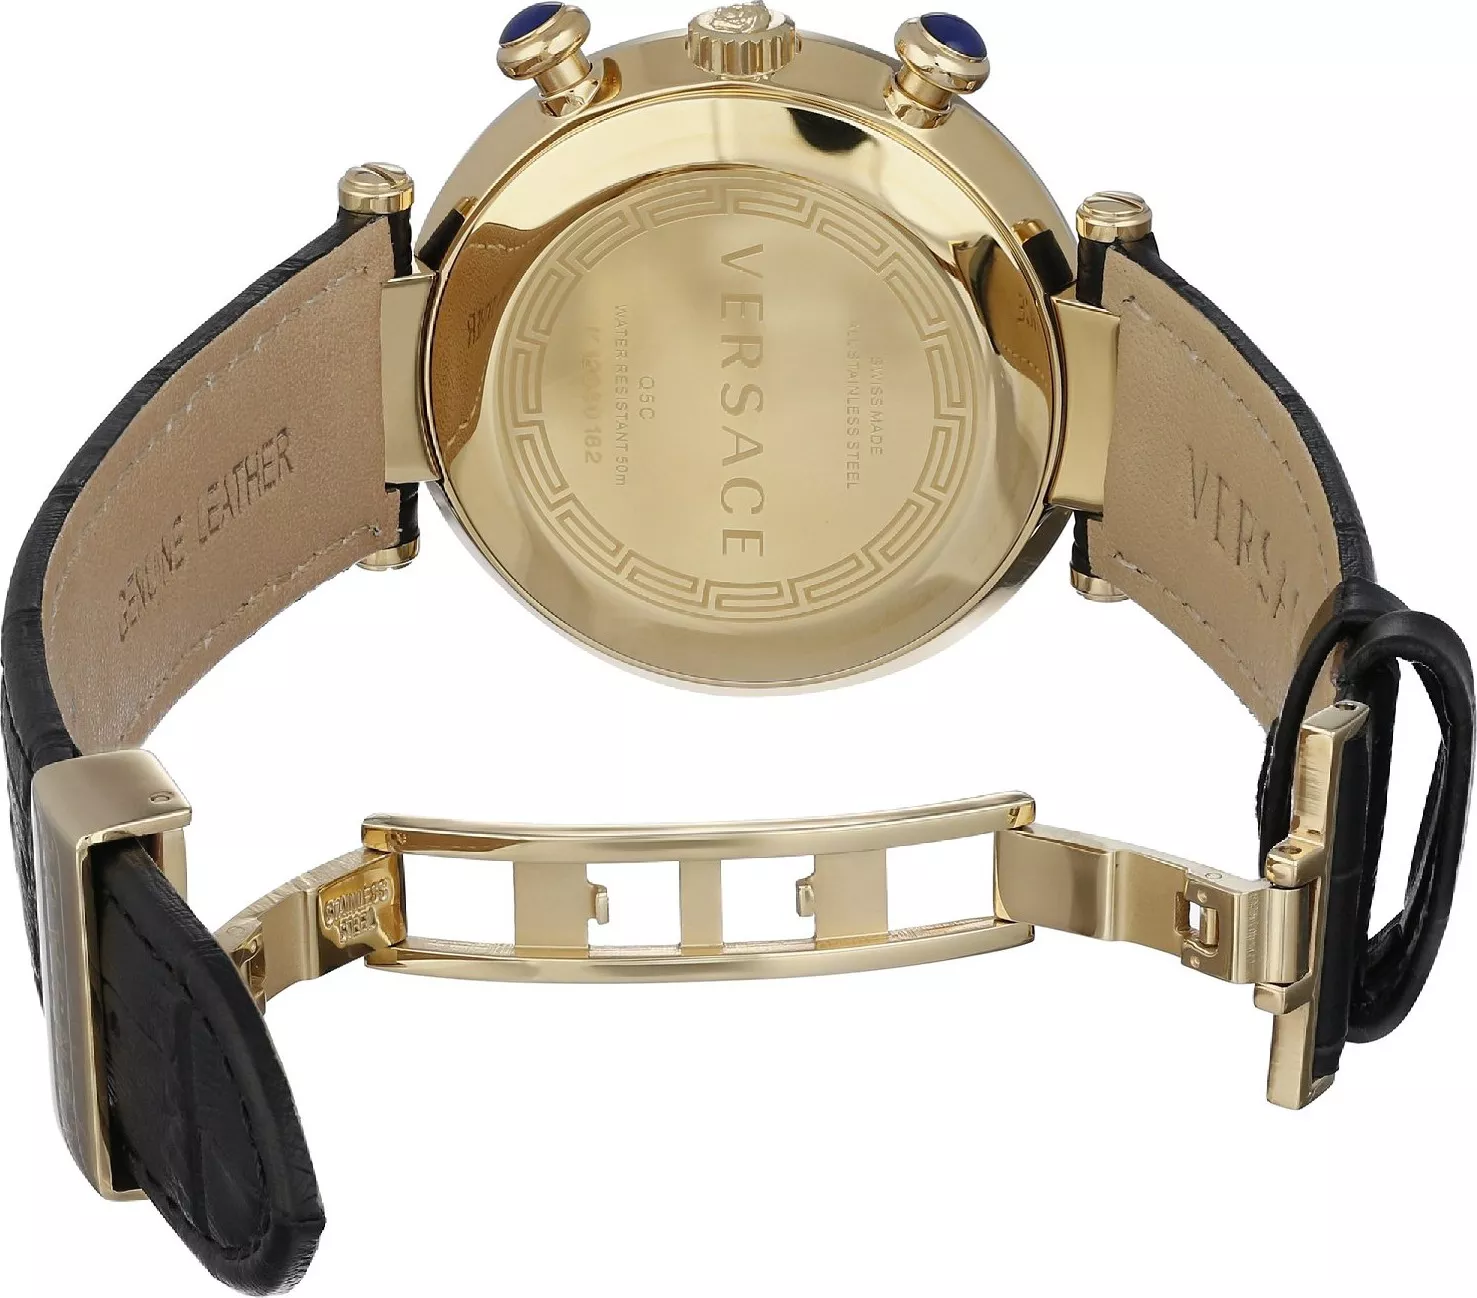 Versace Reve New  Yellow Watch 40mm